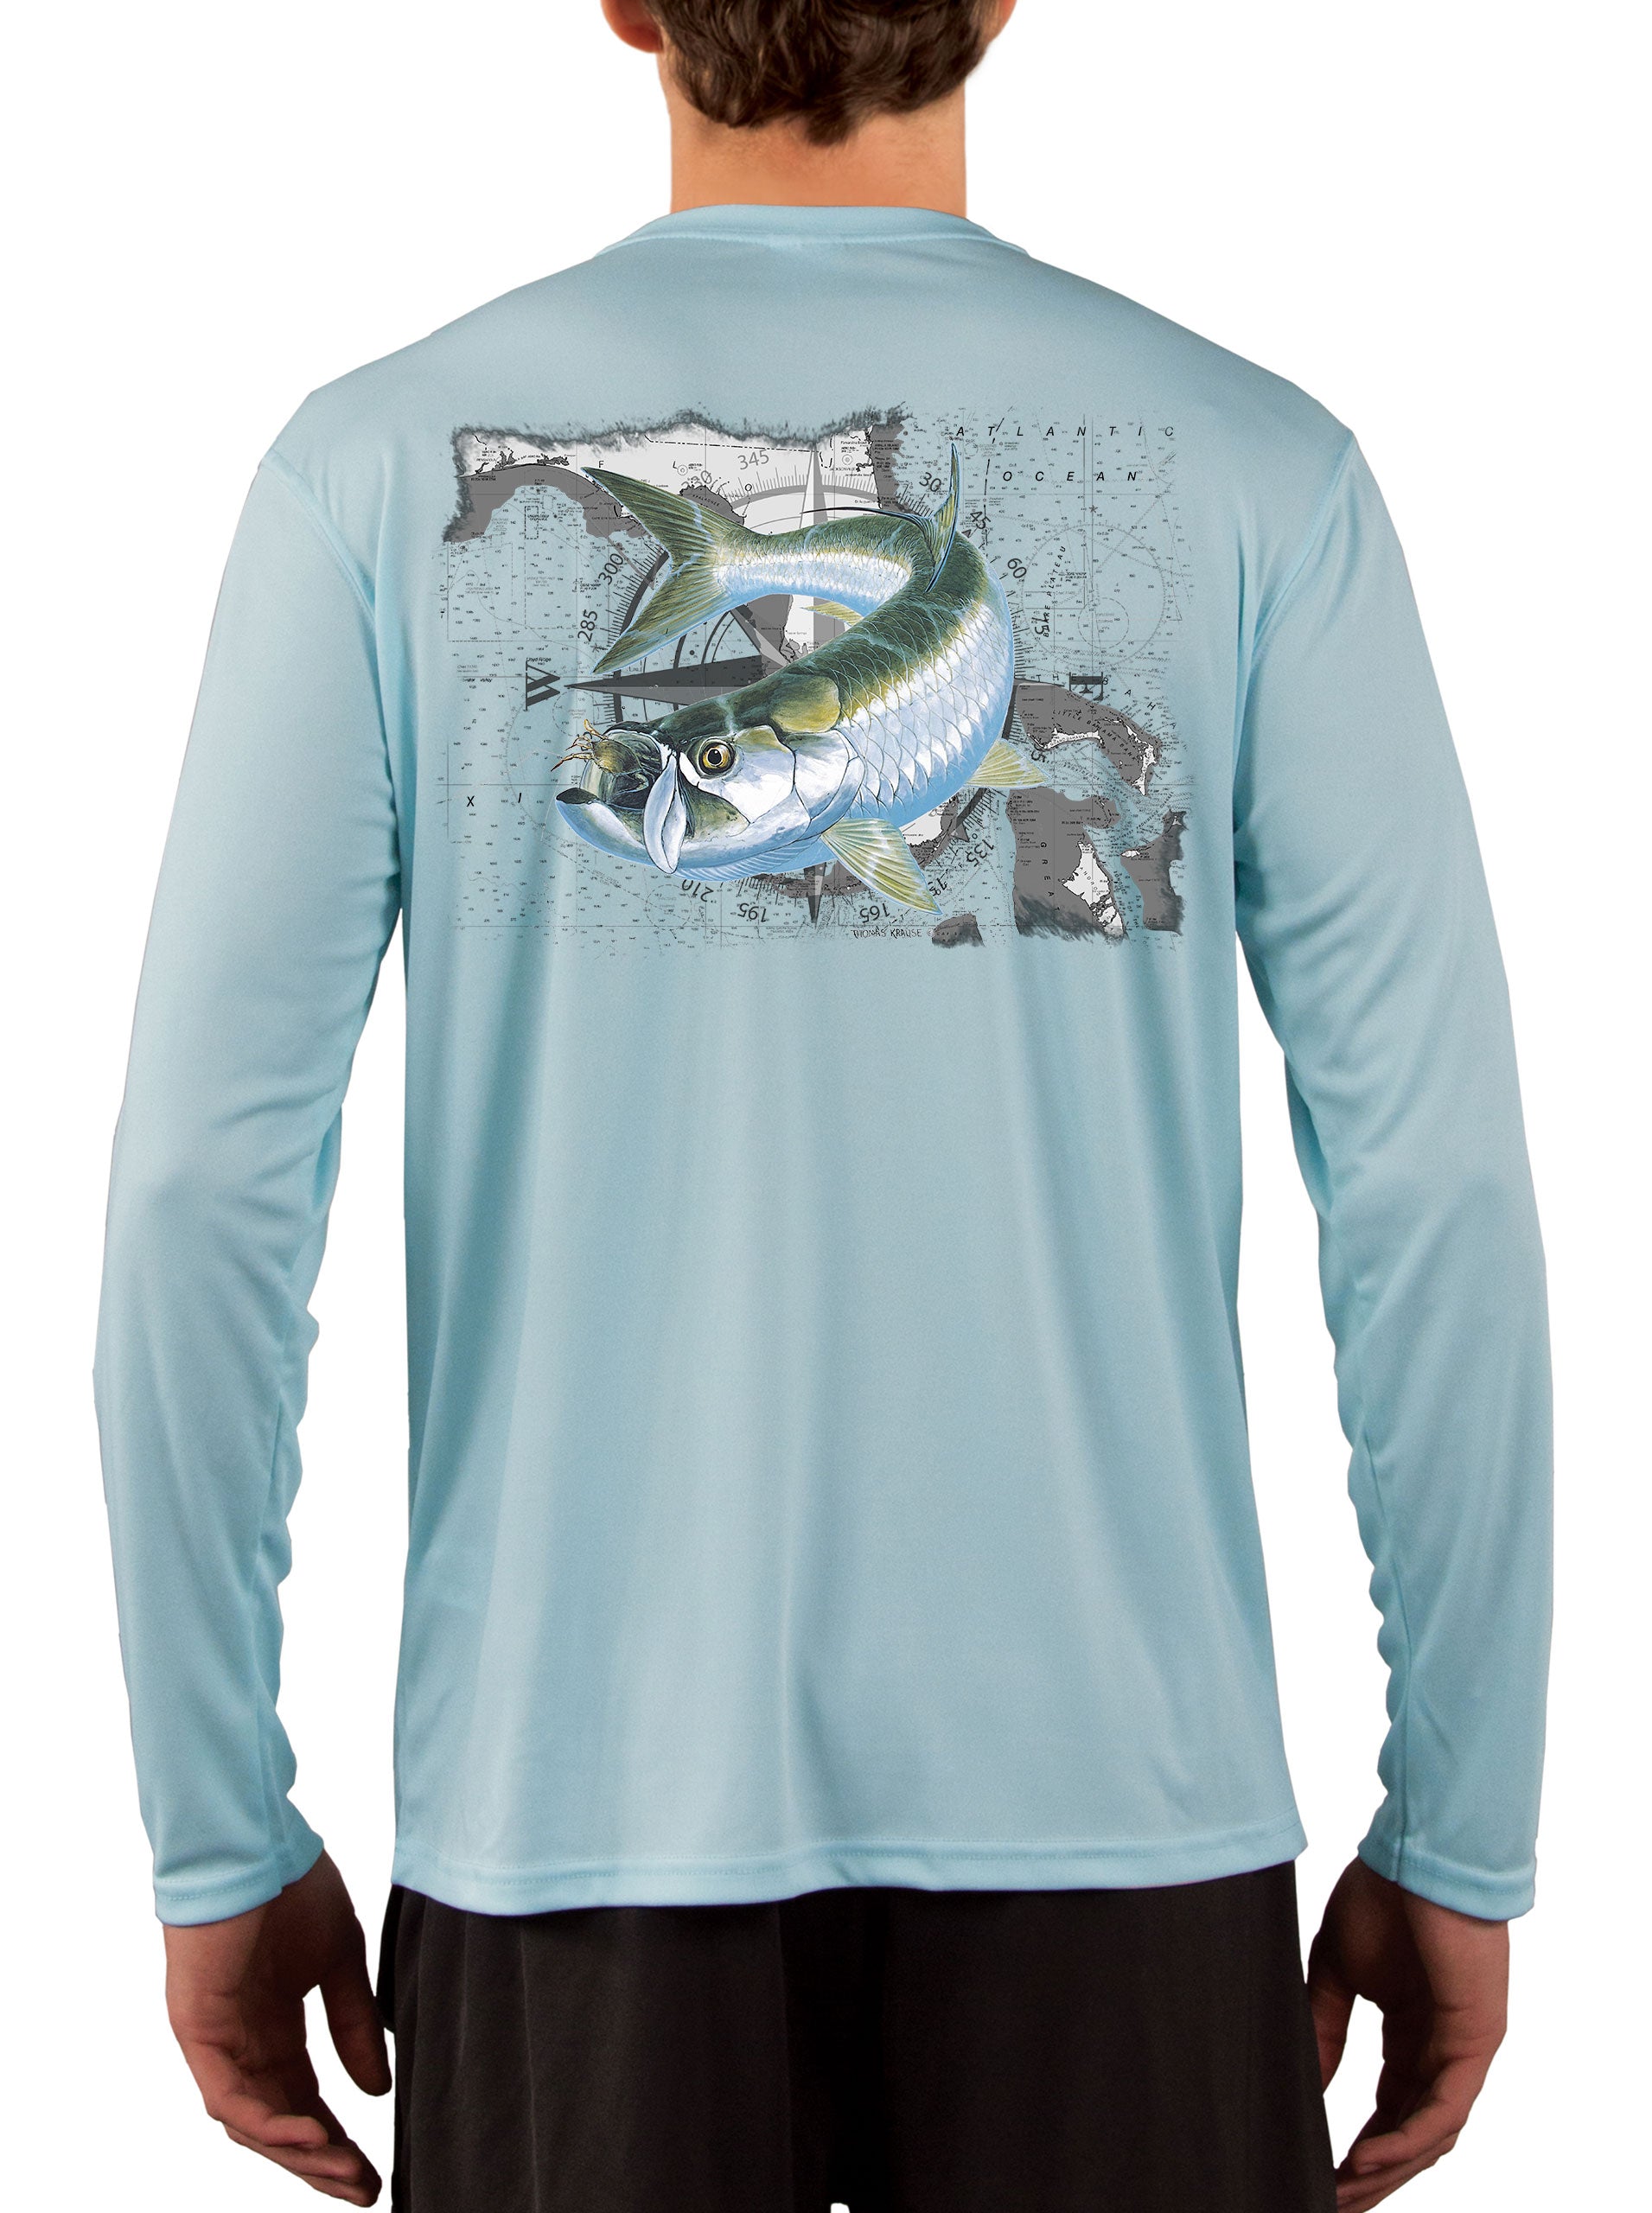 Tarpon Crab Compass Over Florida Map Long Sleeve Men's Fishing Shirt X-Large / Ice Blue